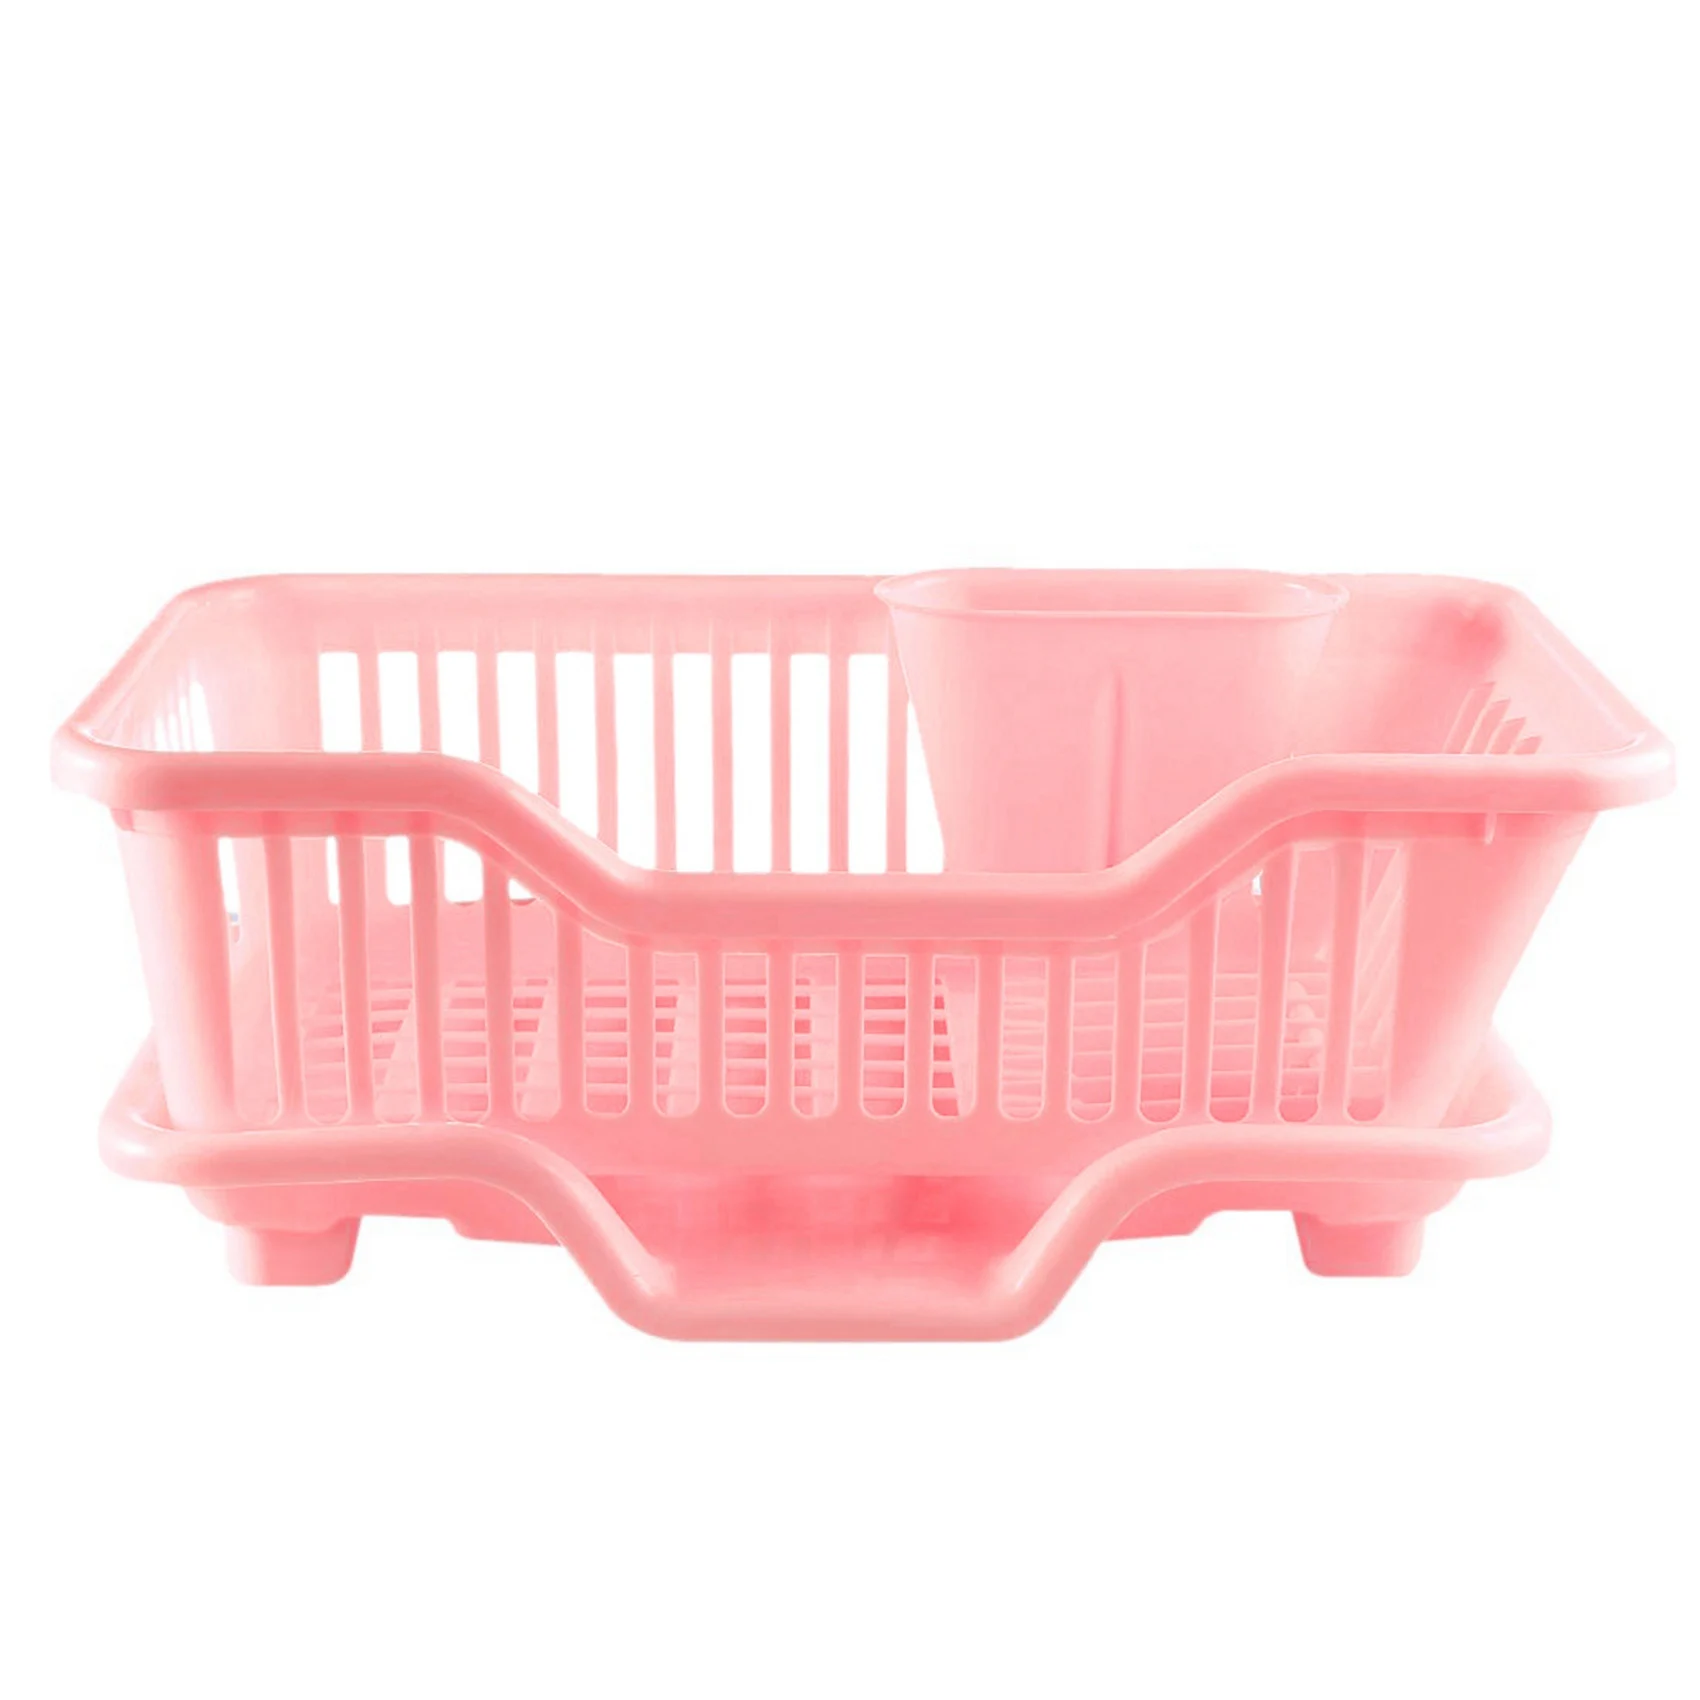 

Environmental Plastic Kitchen Sink Dish Drainer Set Rack Washing Holder Basket Organizer Tray Approx 17.5 x 9.5 x 7INCH (Pink)